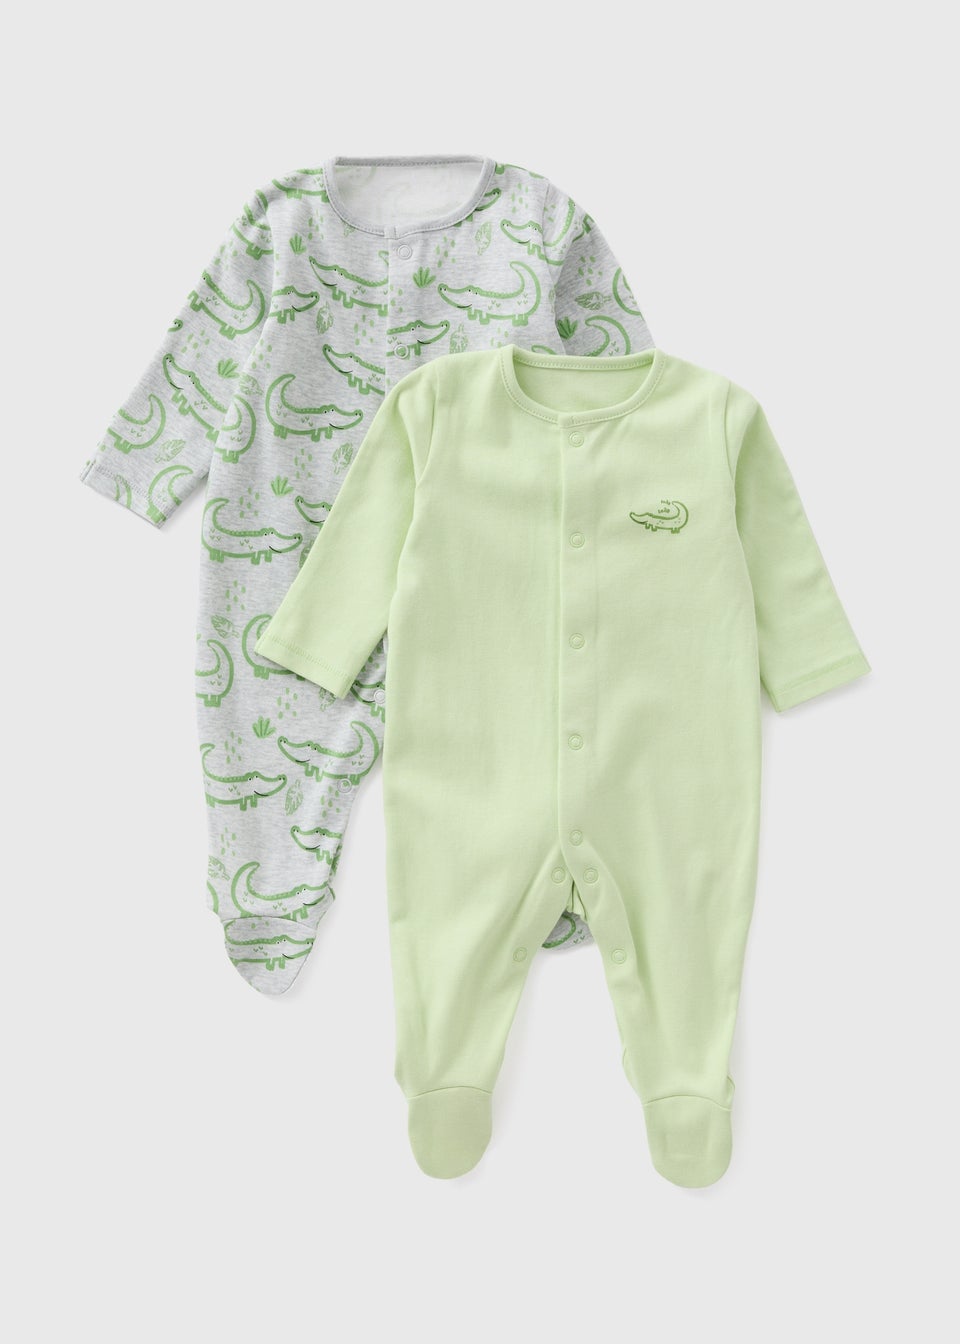 Baby 2 Pack Green Croc Sleepsuits (Newborn-23mths)